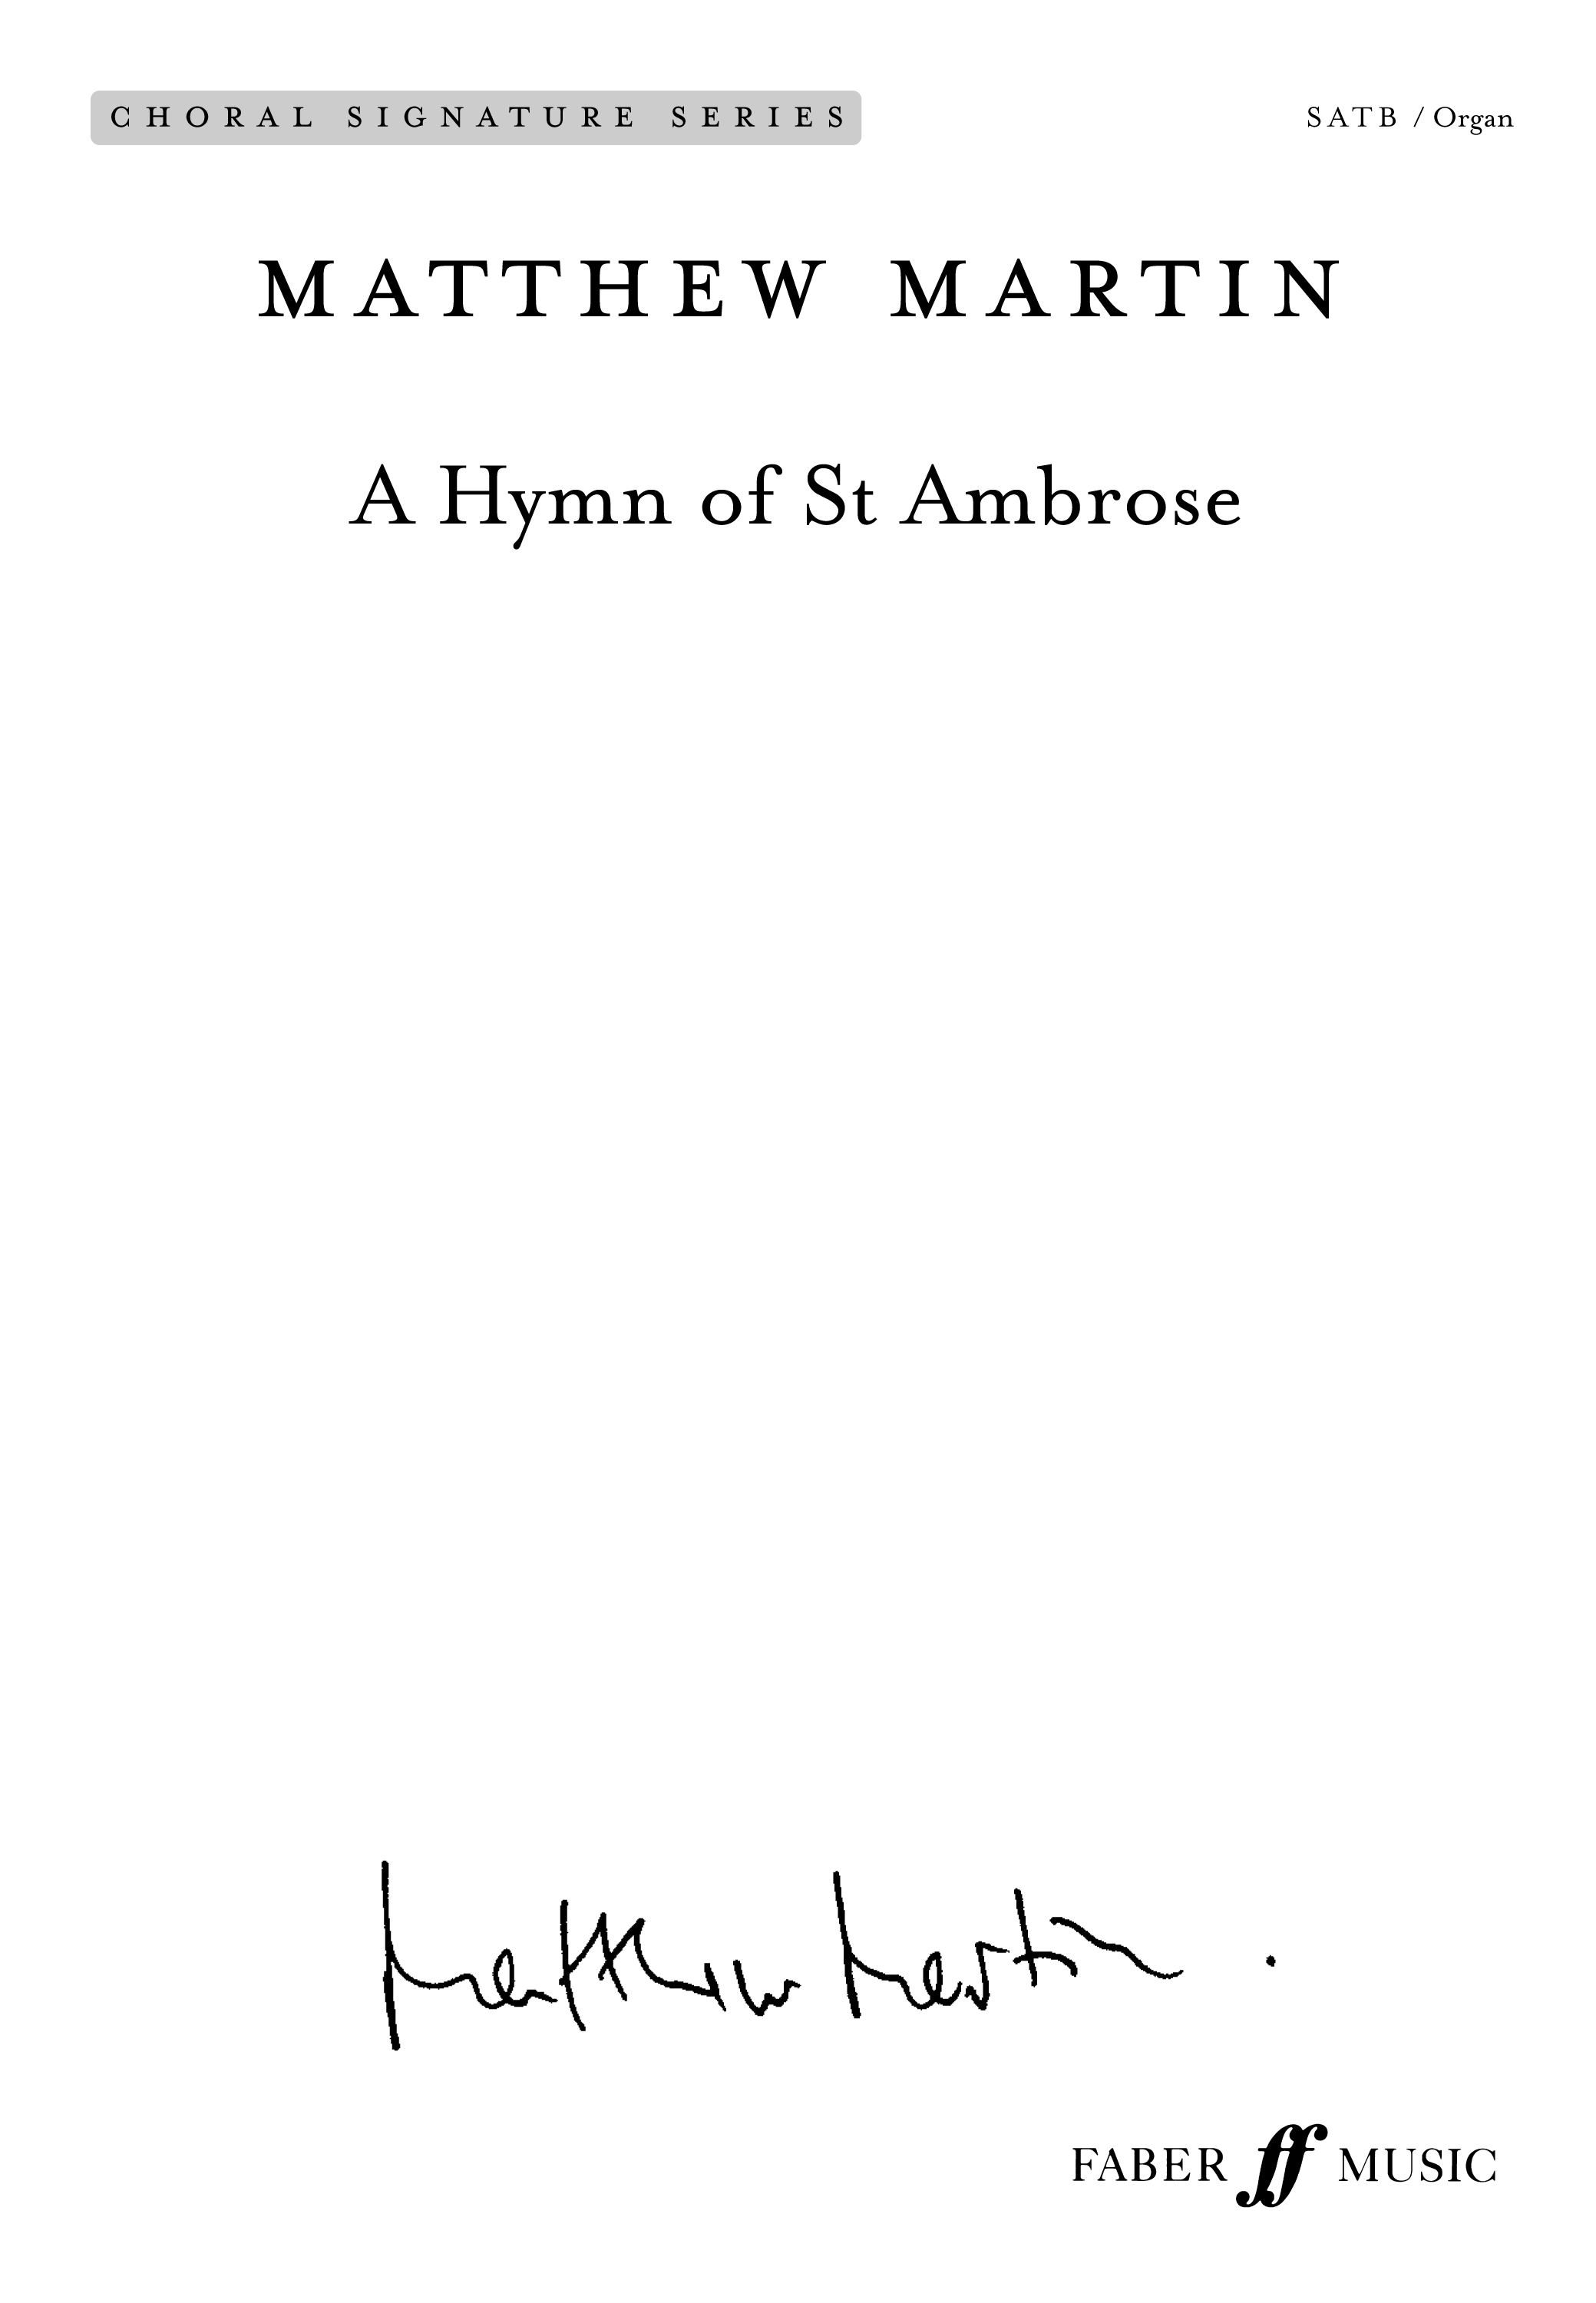 A Hymn of St Ambrose (MARTIN MATTHEW)